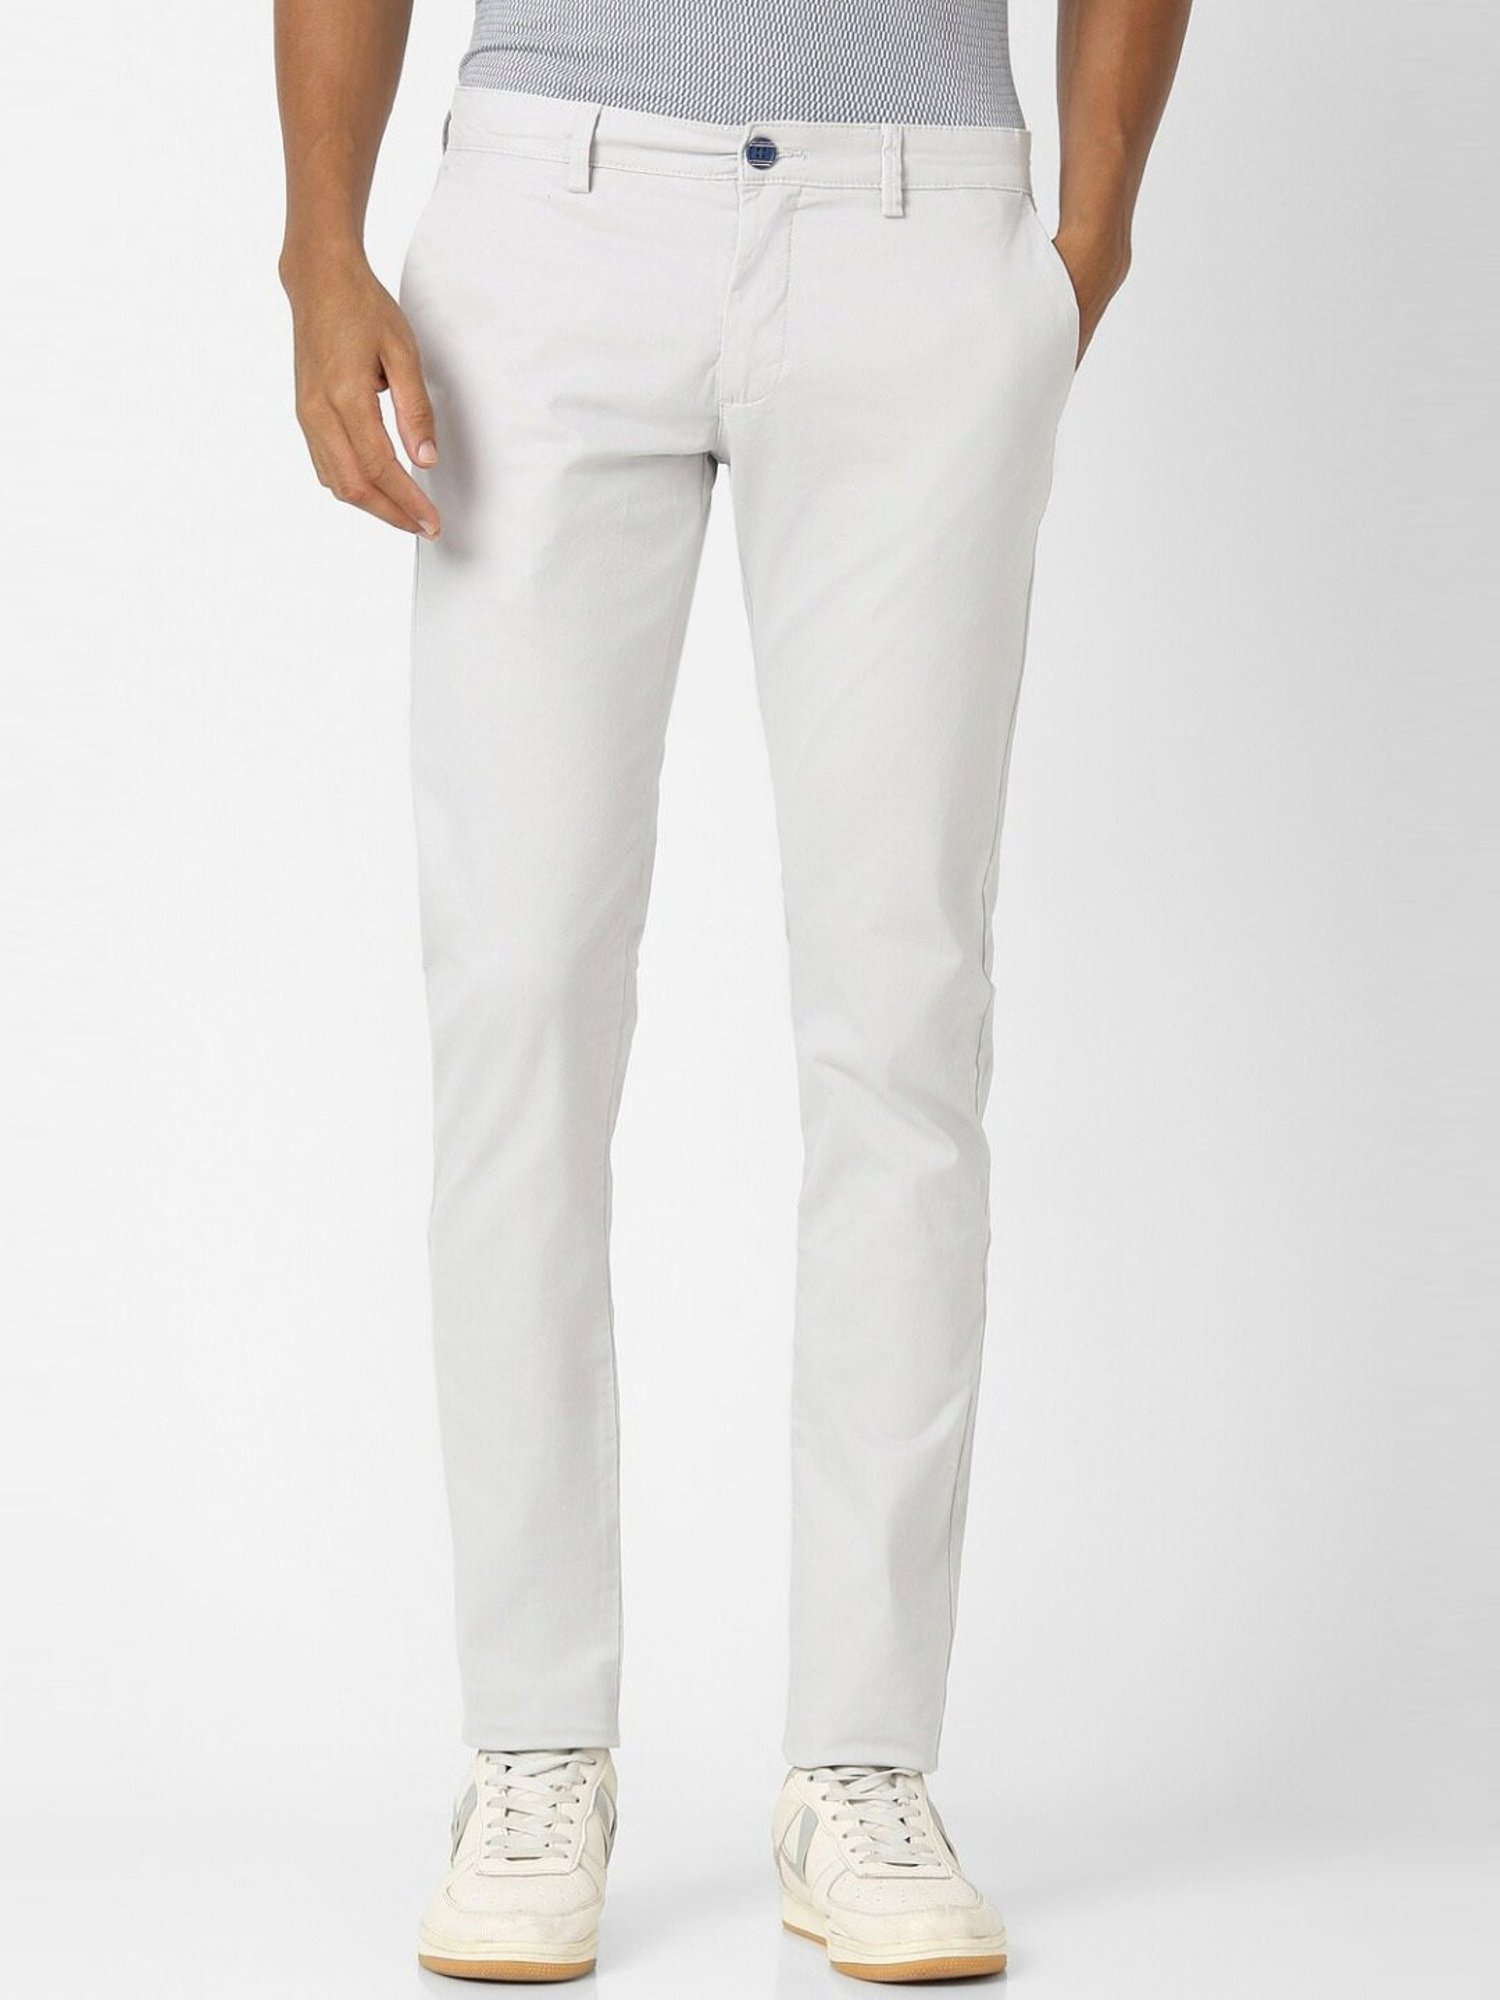 High Quality 2021 Fashion Slim Male White Jeans Mens Trousers Mens Casual  Pants Skinny Pencil Pants Boys Hip Hop Pantalon Homme  Casual Pants   AliExpress